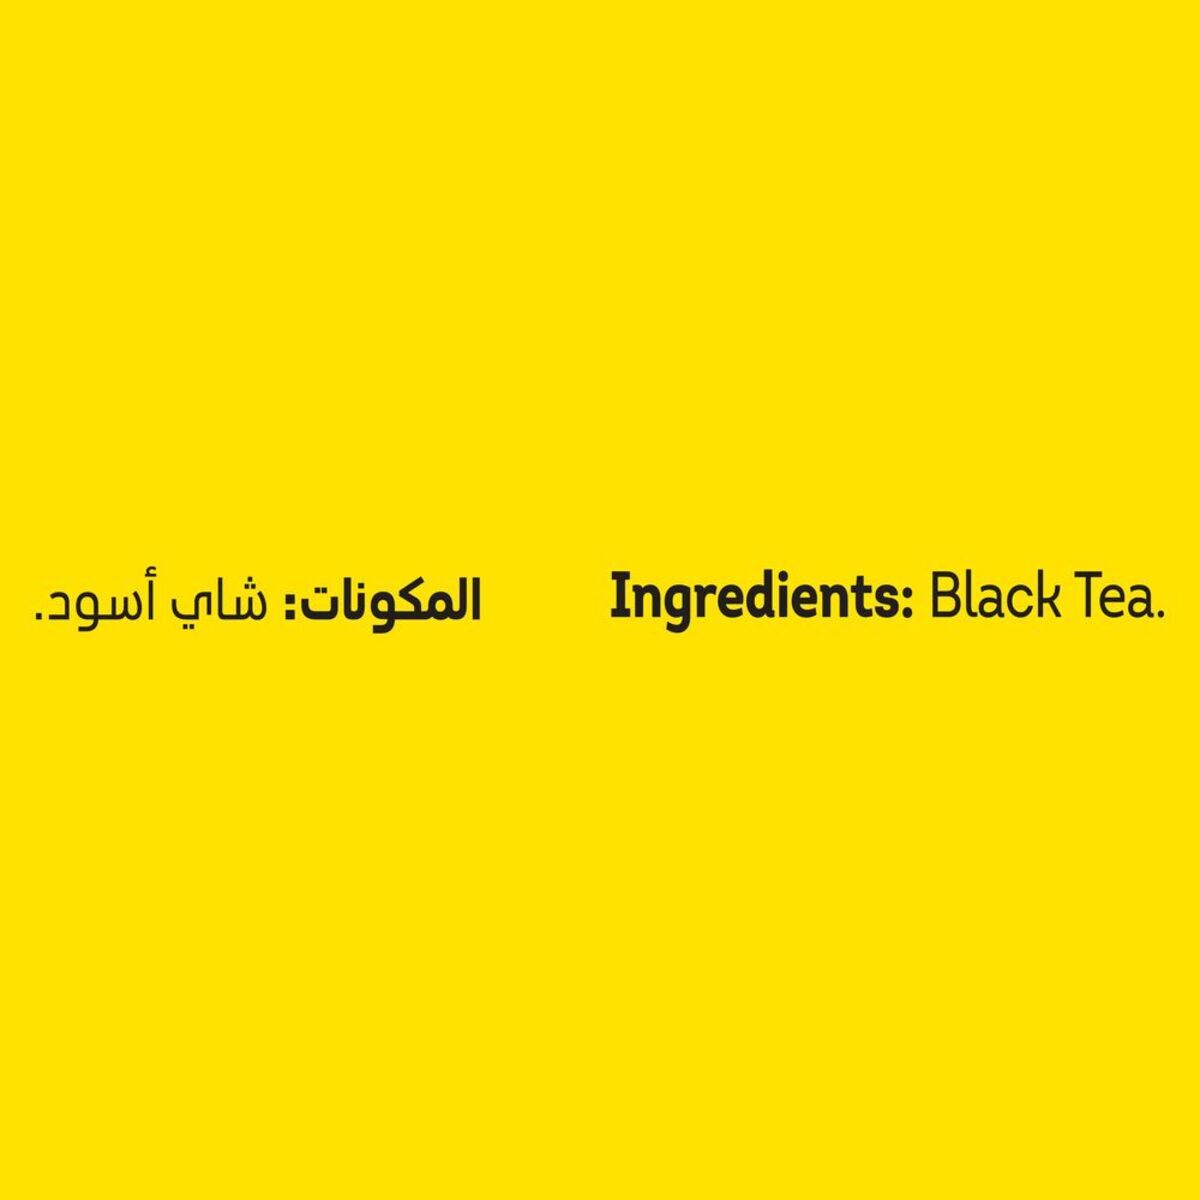 Lipton Yellow Label Tea Value Pack 176 Teabags